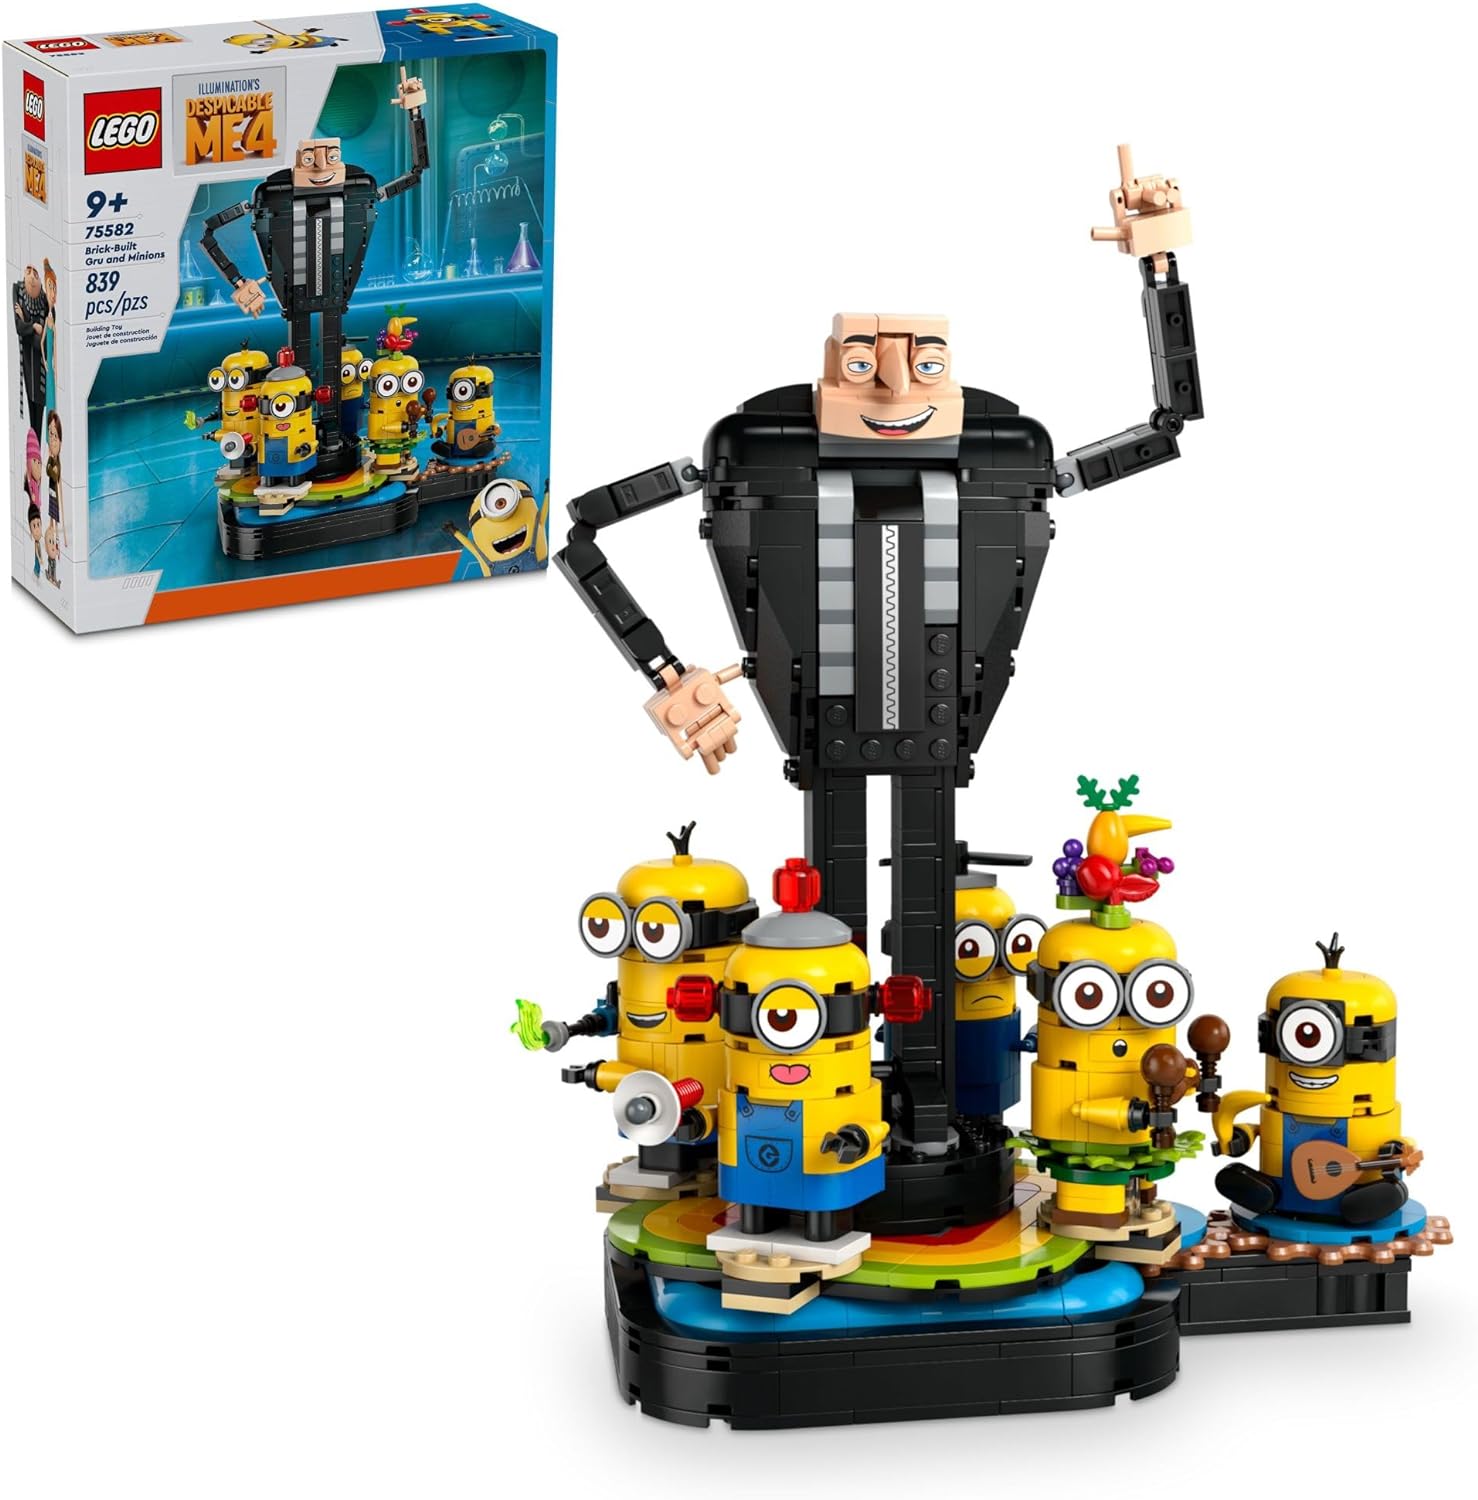 Minions Lego with Guru Lego Figure - Despicable Me Lego Set - Buildable Minions Figures - Minion Bob, Kevin, Figure